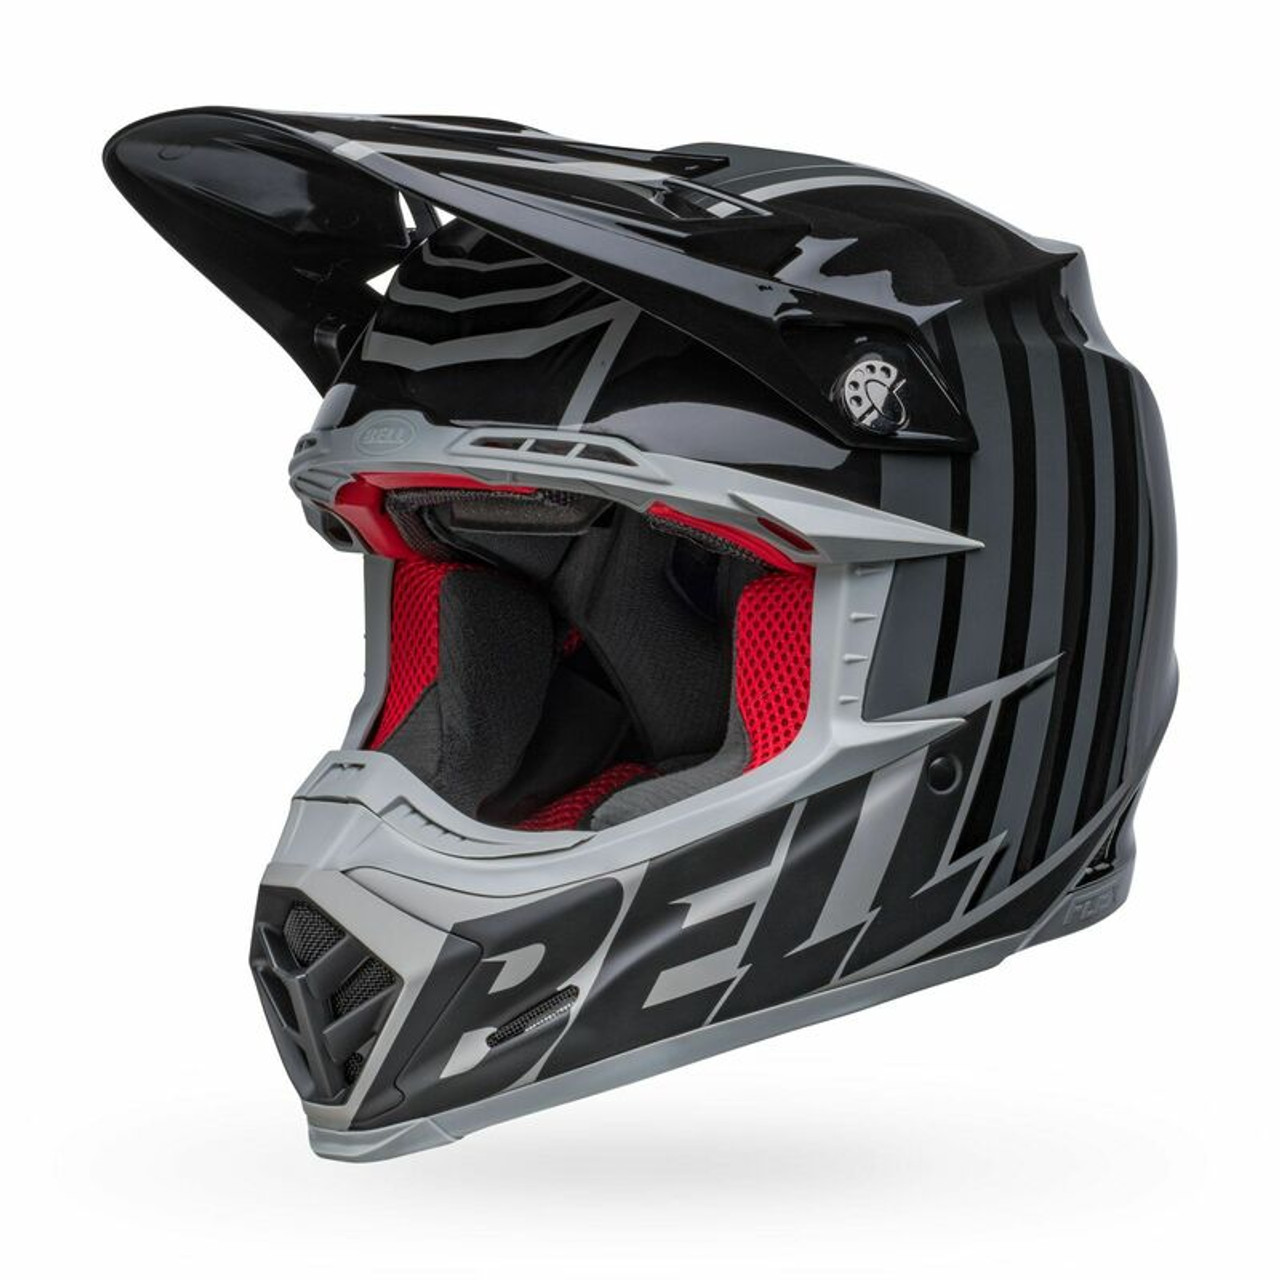 Bell Moto 9-S Flex Helmet Review at SpeedAddicts.com 